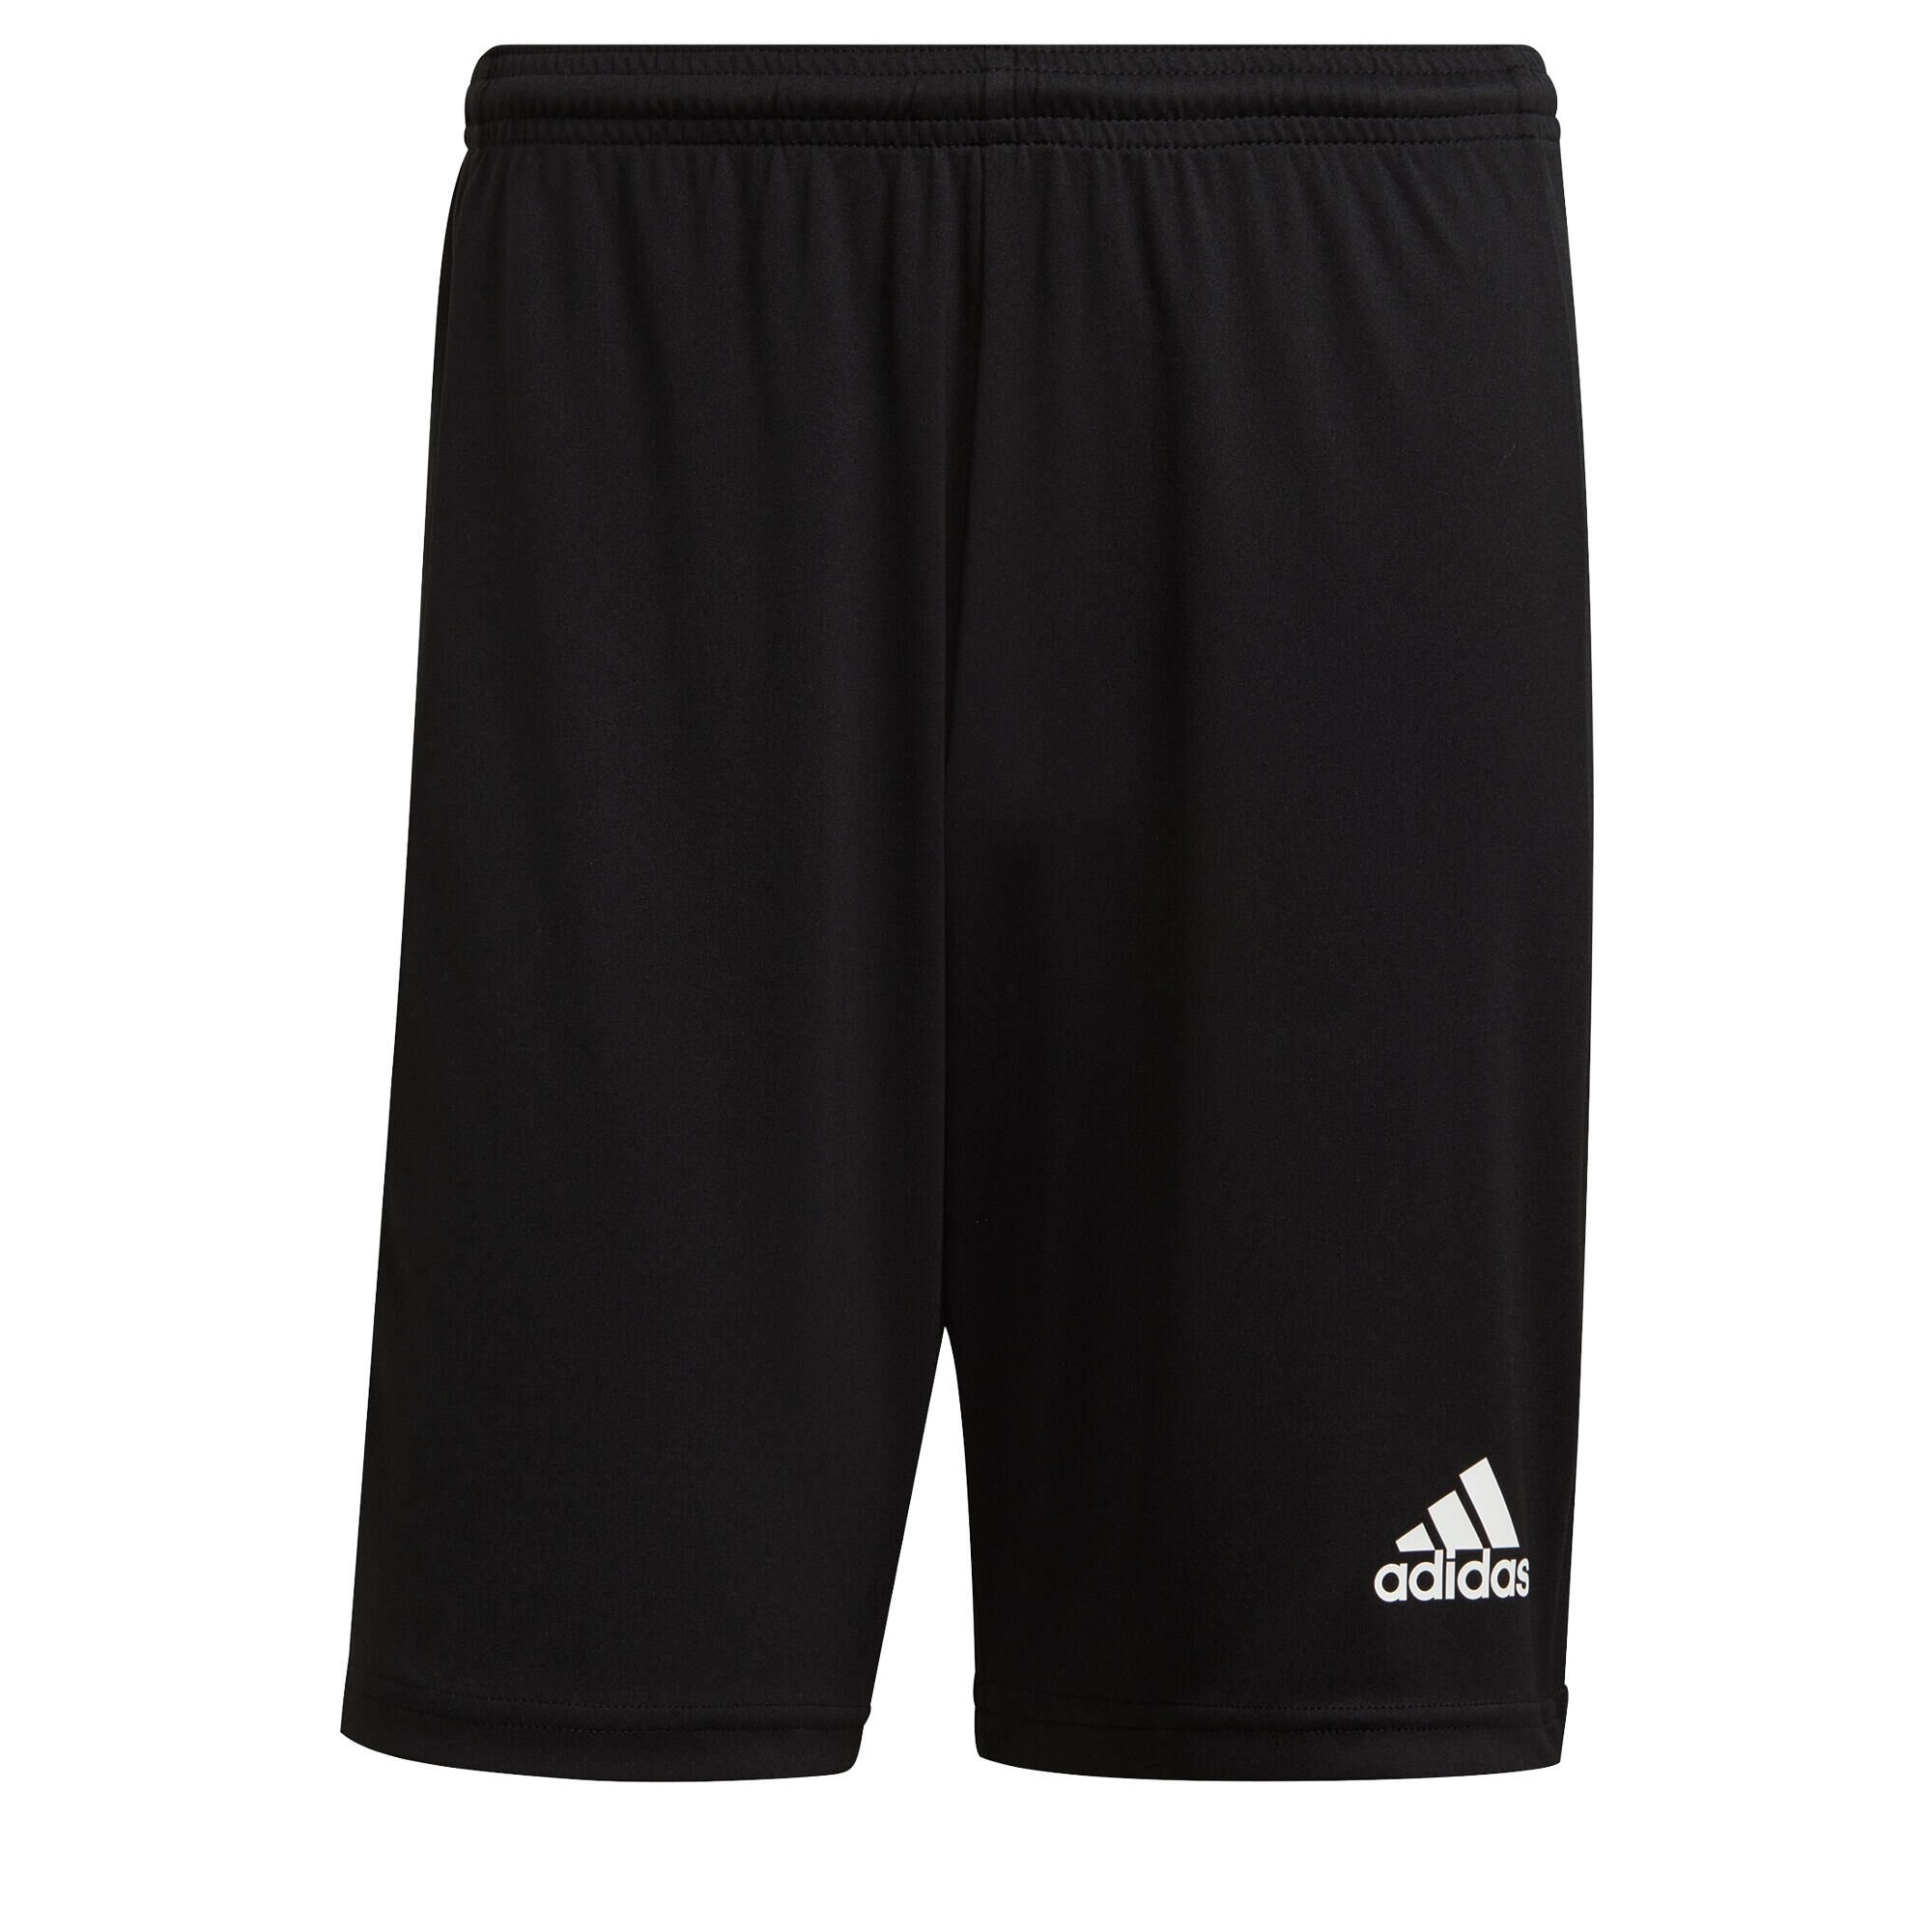 ADIDAS Men's Football Shorts Squadra - Black